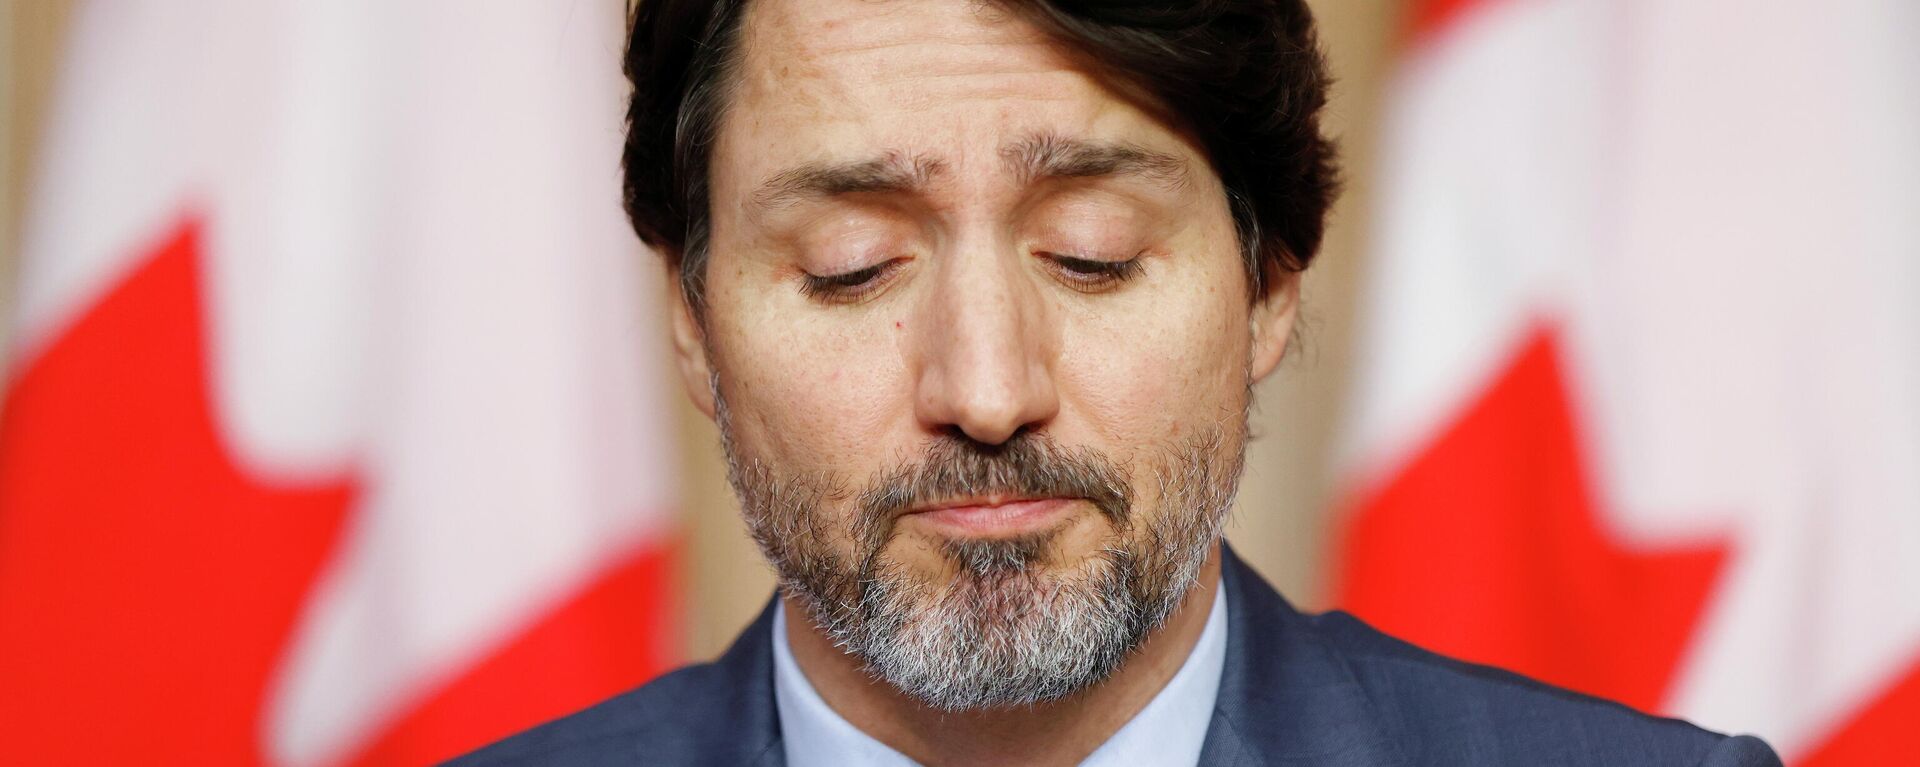 El primer ministro de Canadá, Justin Trudeau - Sputnik Mundo, 1920, 31.03.2021